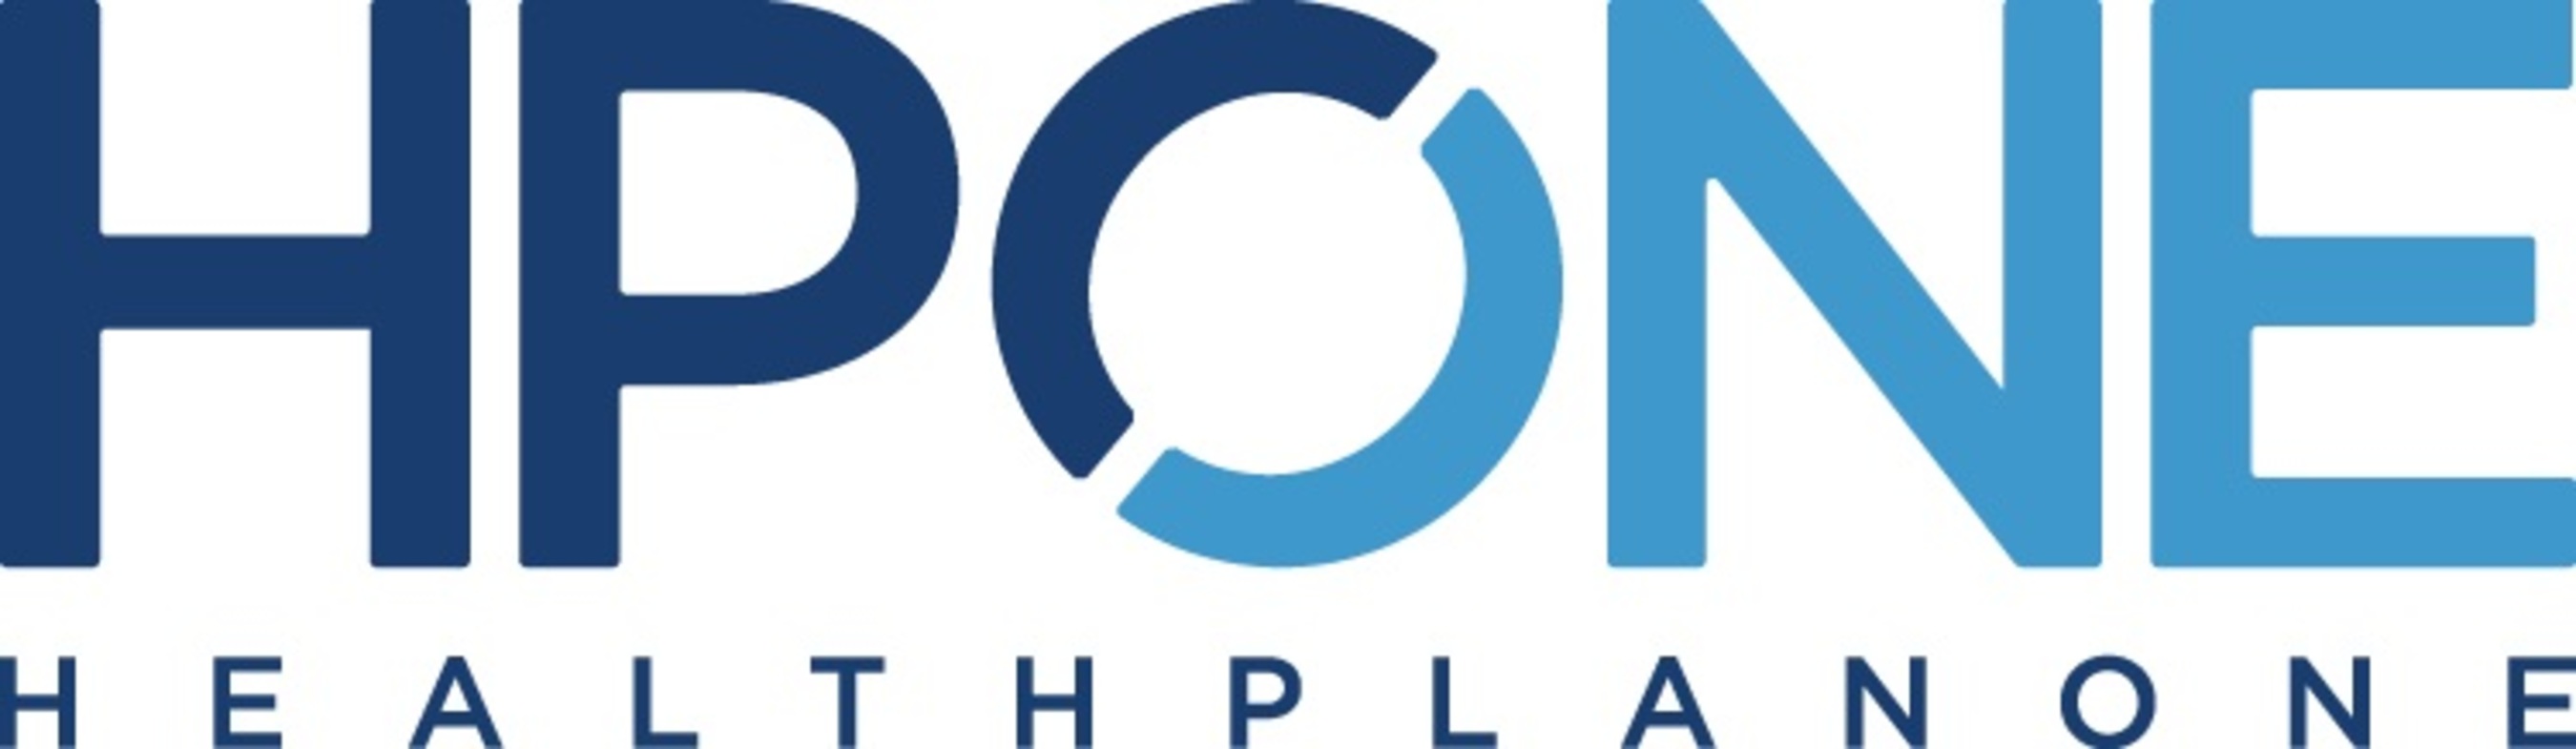 HealthPlanOne Logo.